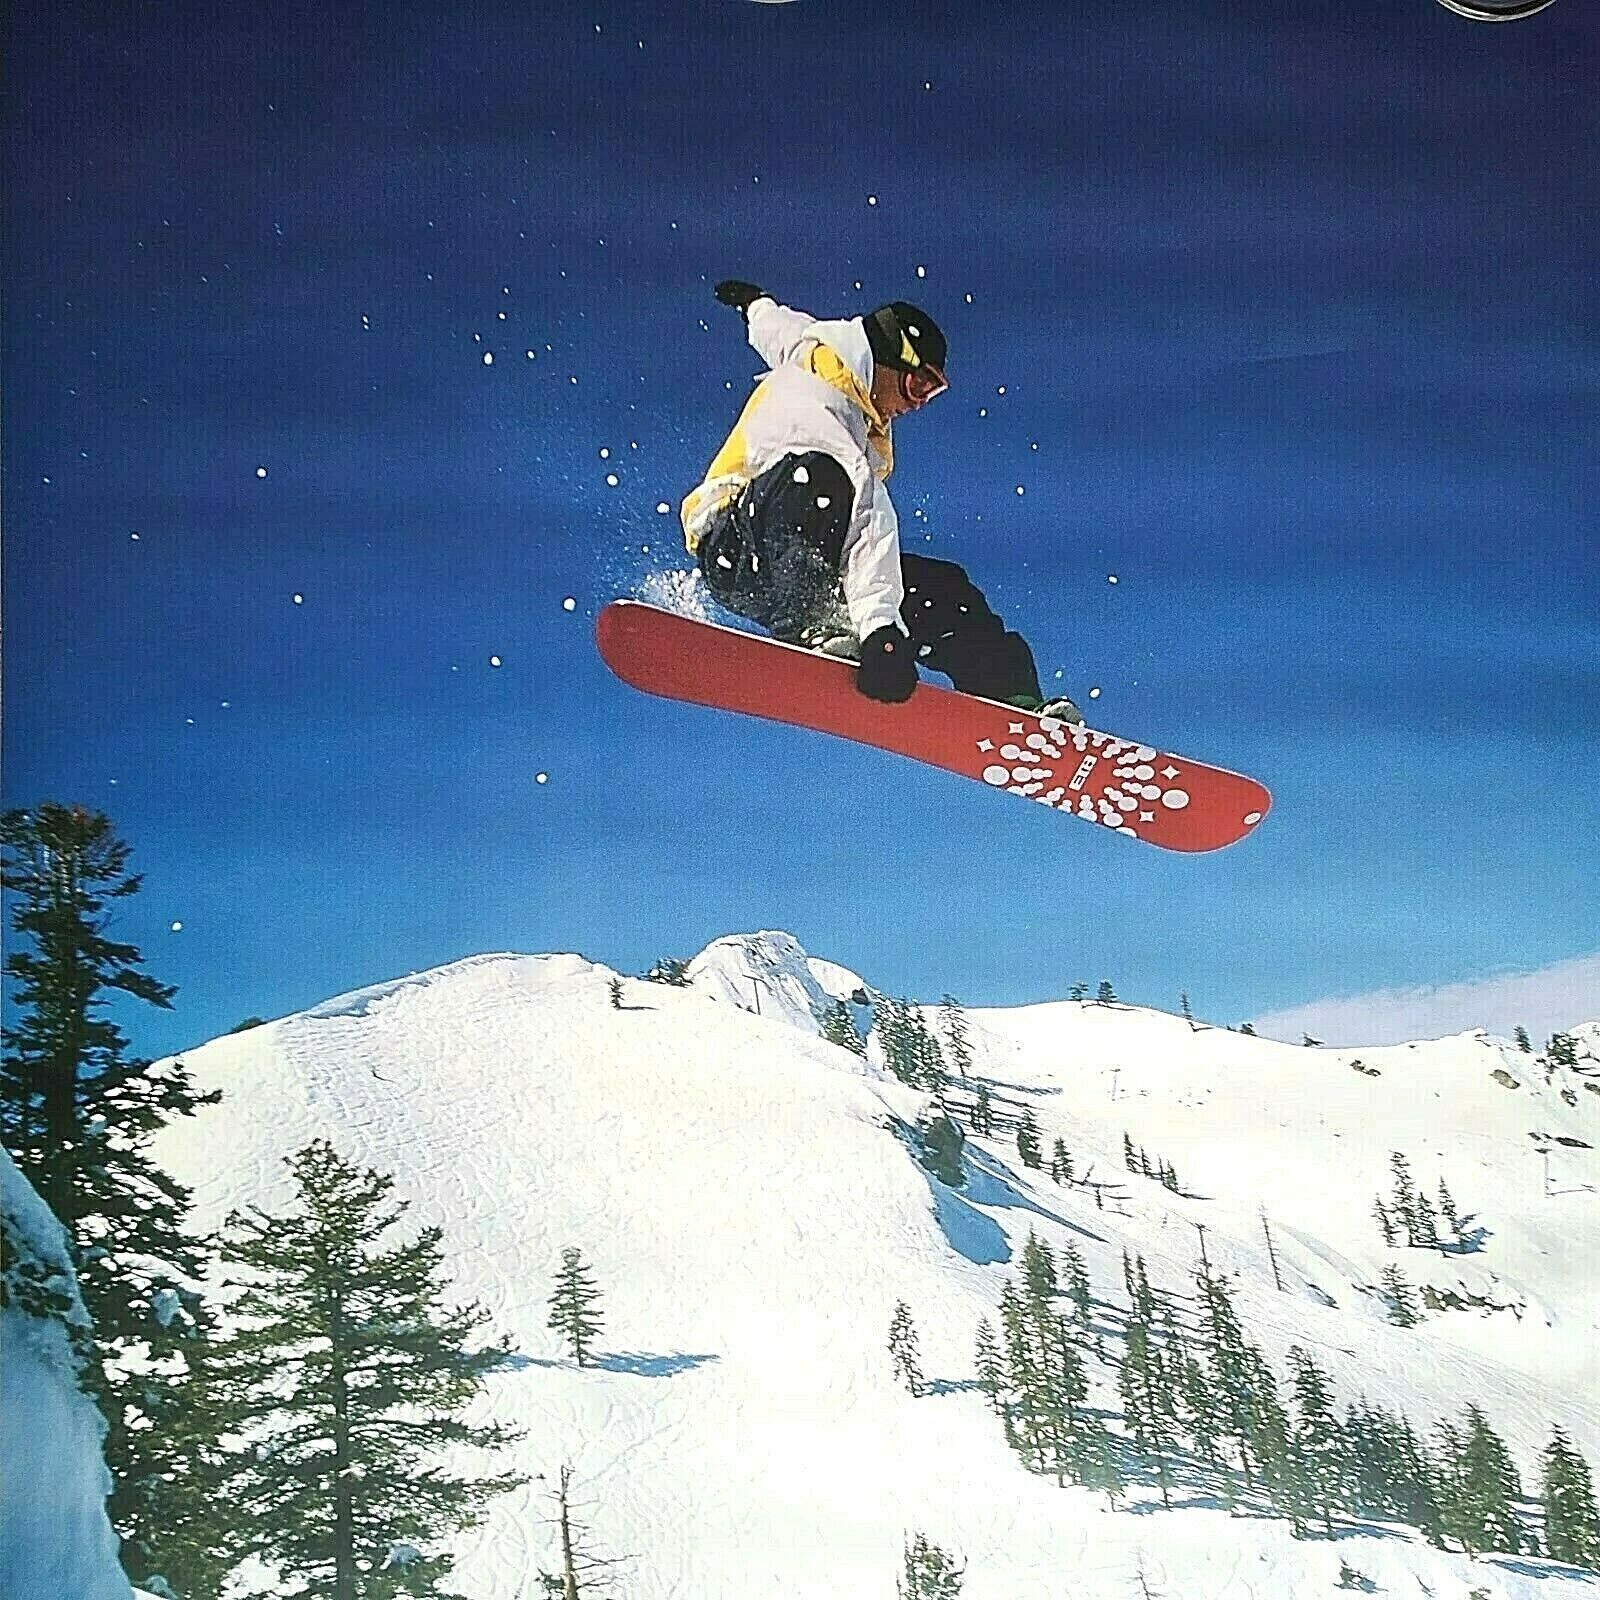 Snowboarder Poster 2007 Gifts Ranking TOP10 Pyramid Sang High Snowboardin Tan Flying